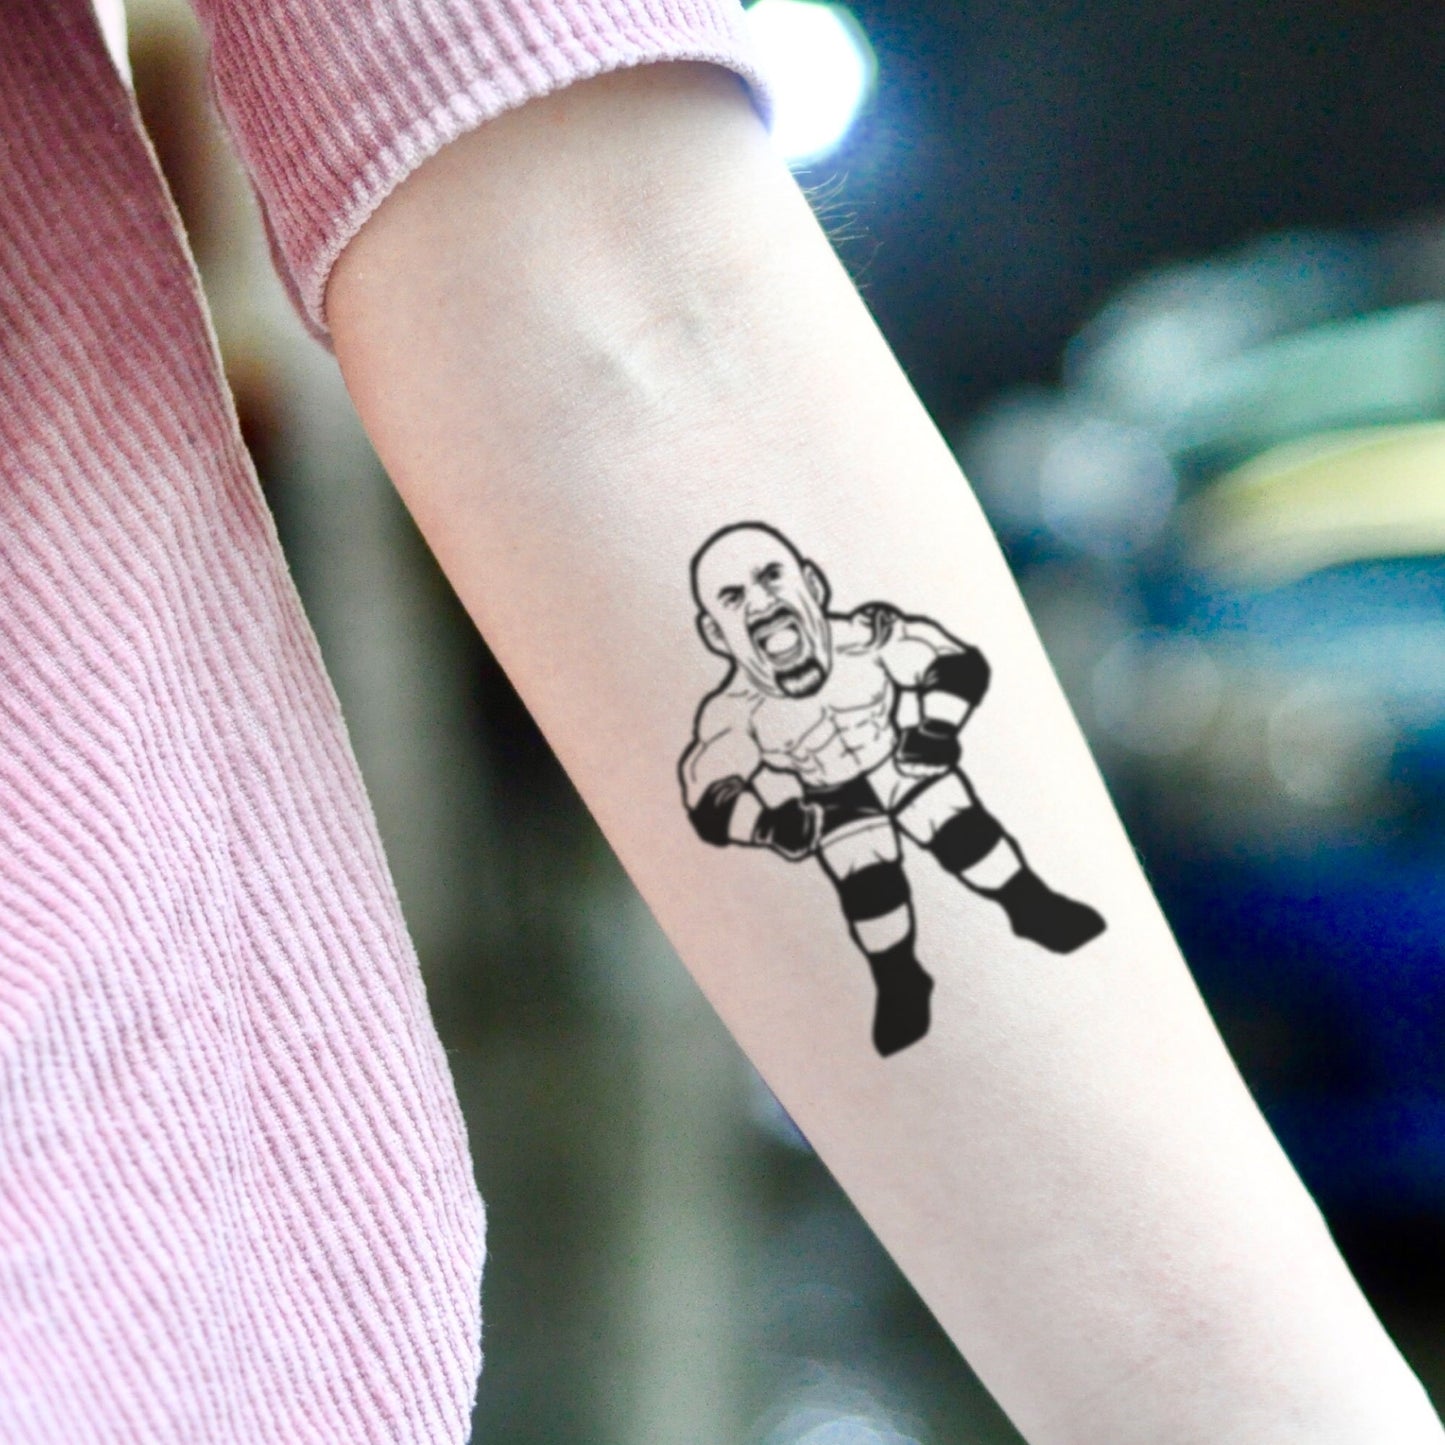 fake small stone cold steve austin wwe illustrative temporary tattoo sticker design idea on inner arm